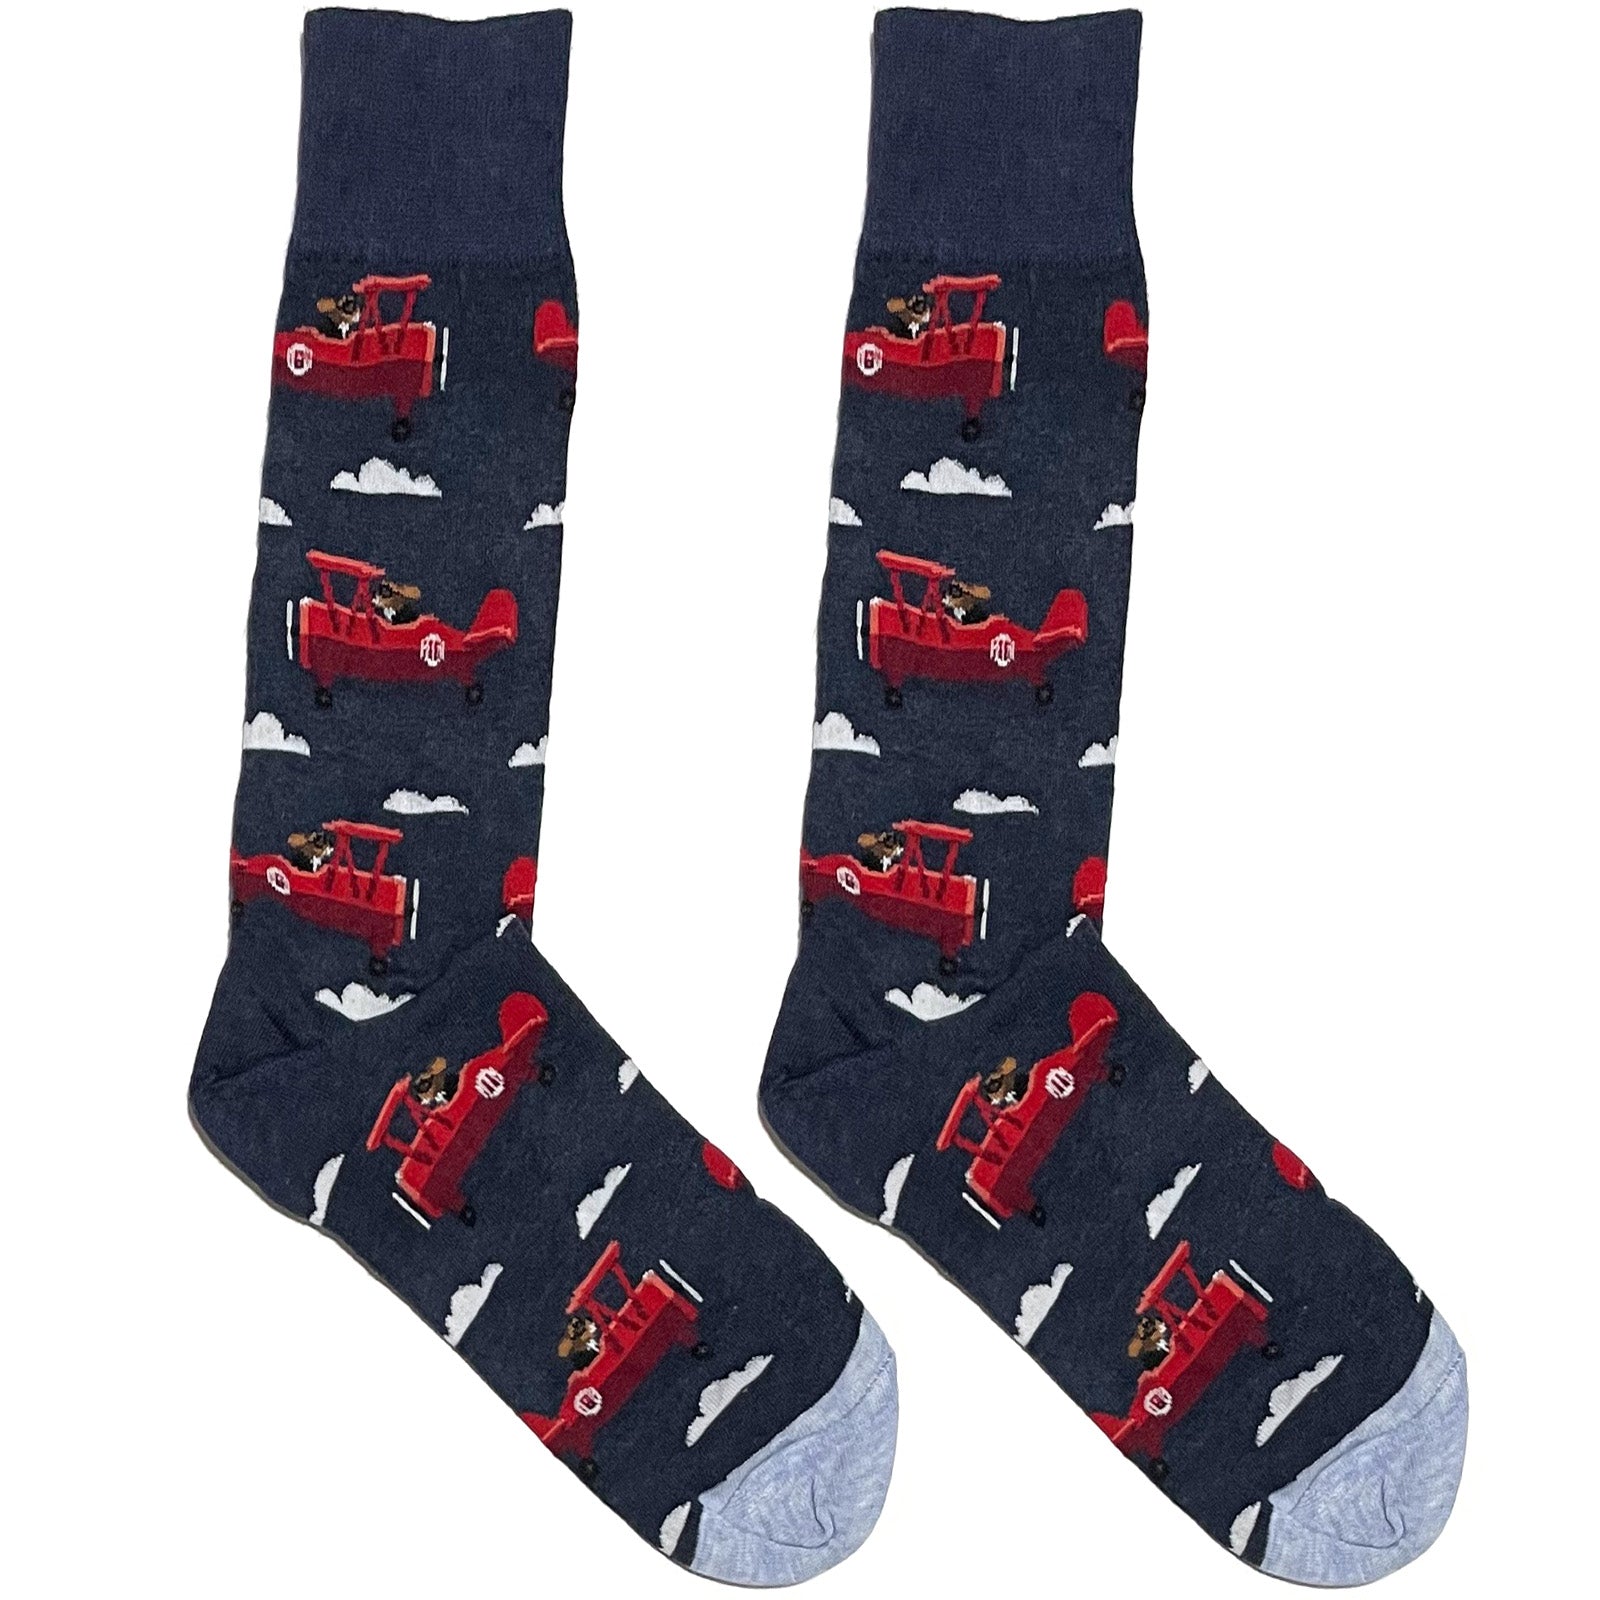 Blue And Red Aeroplane Socks